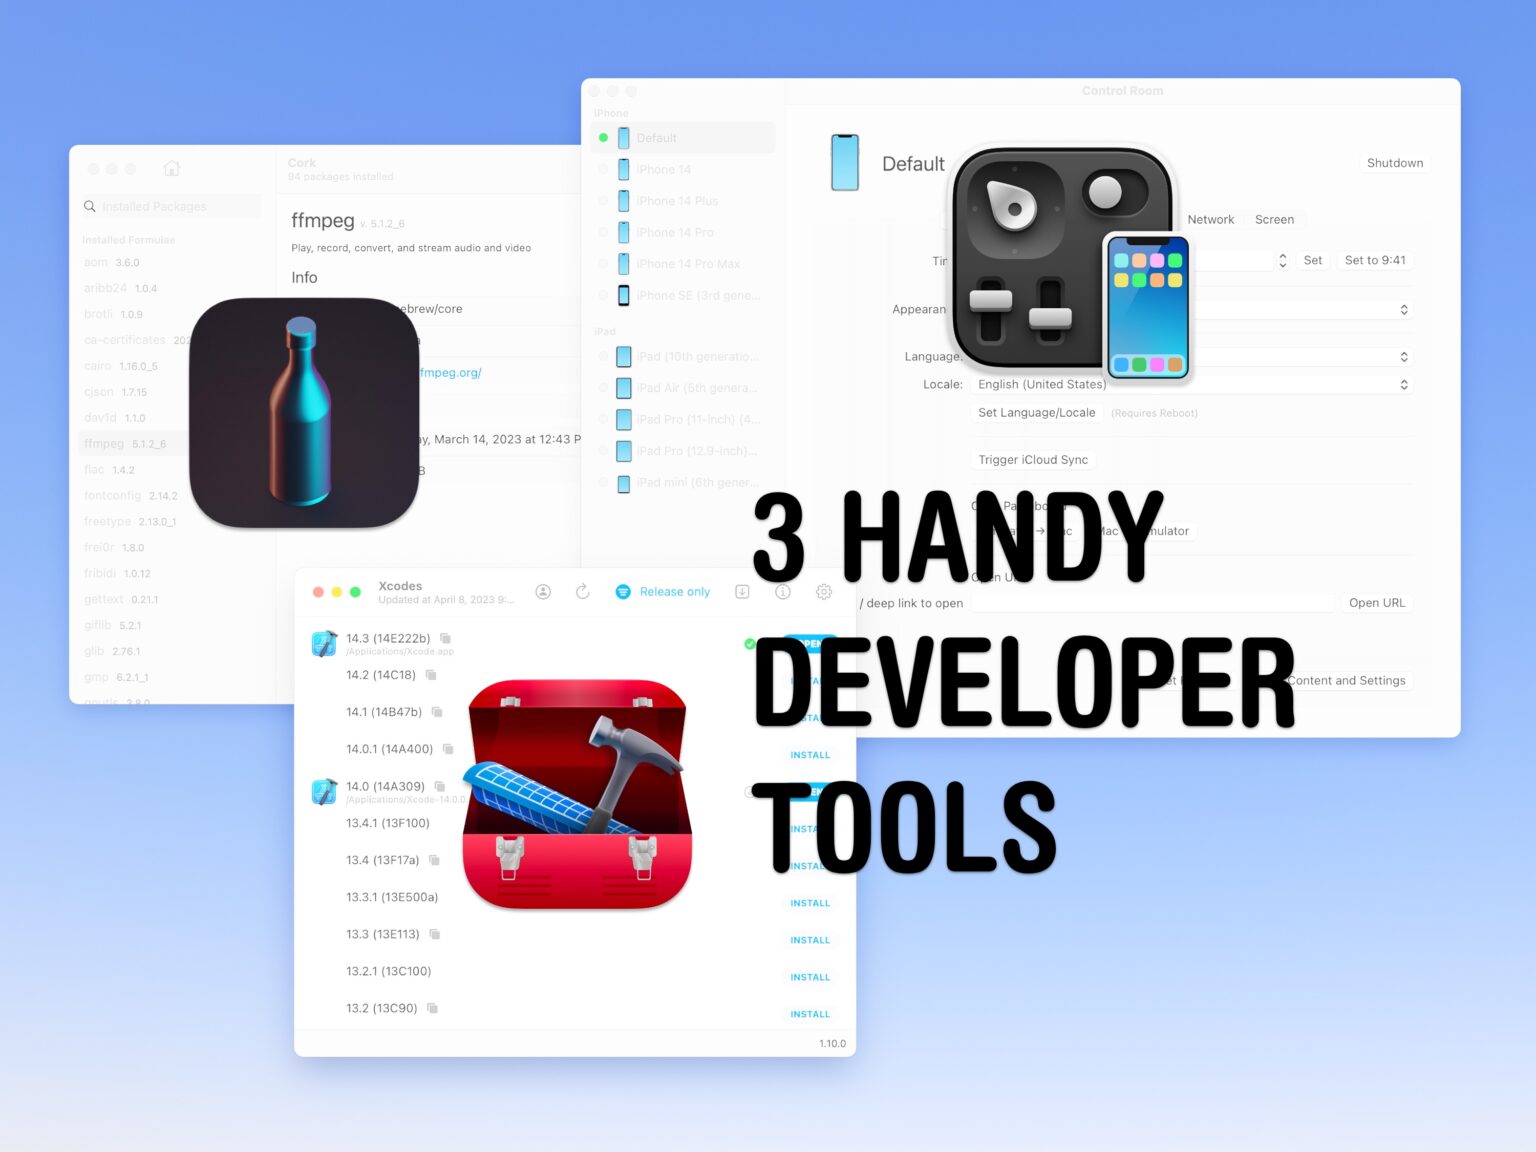 3 handy developer tools